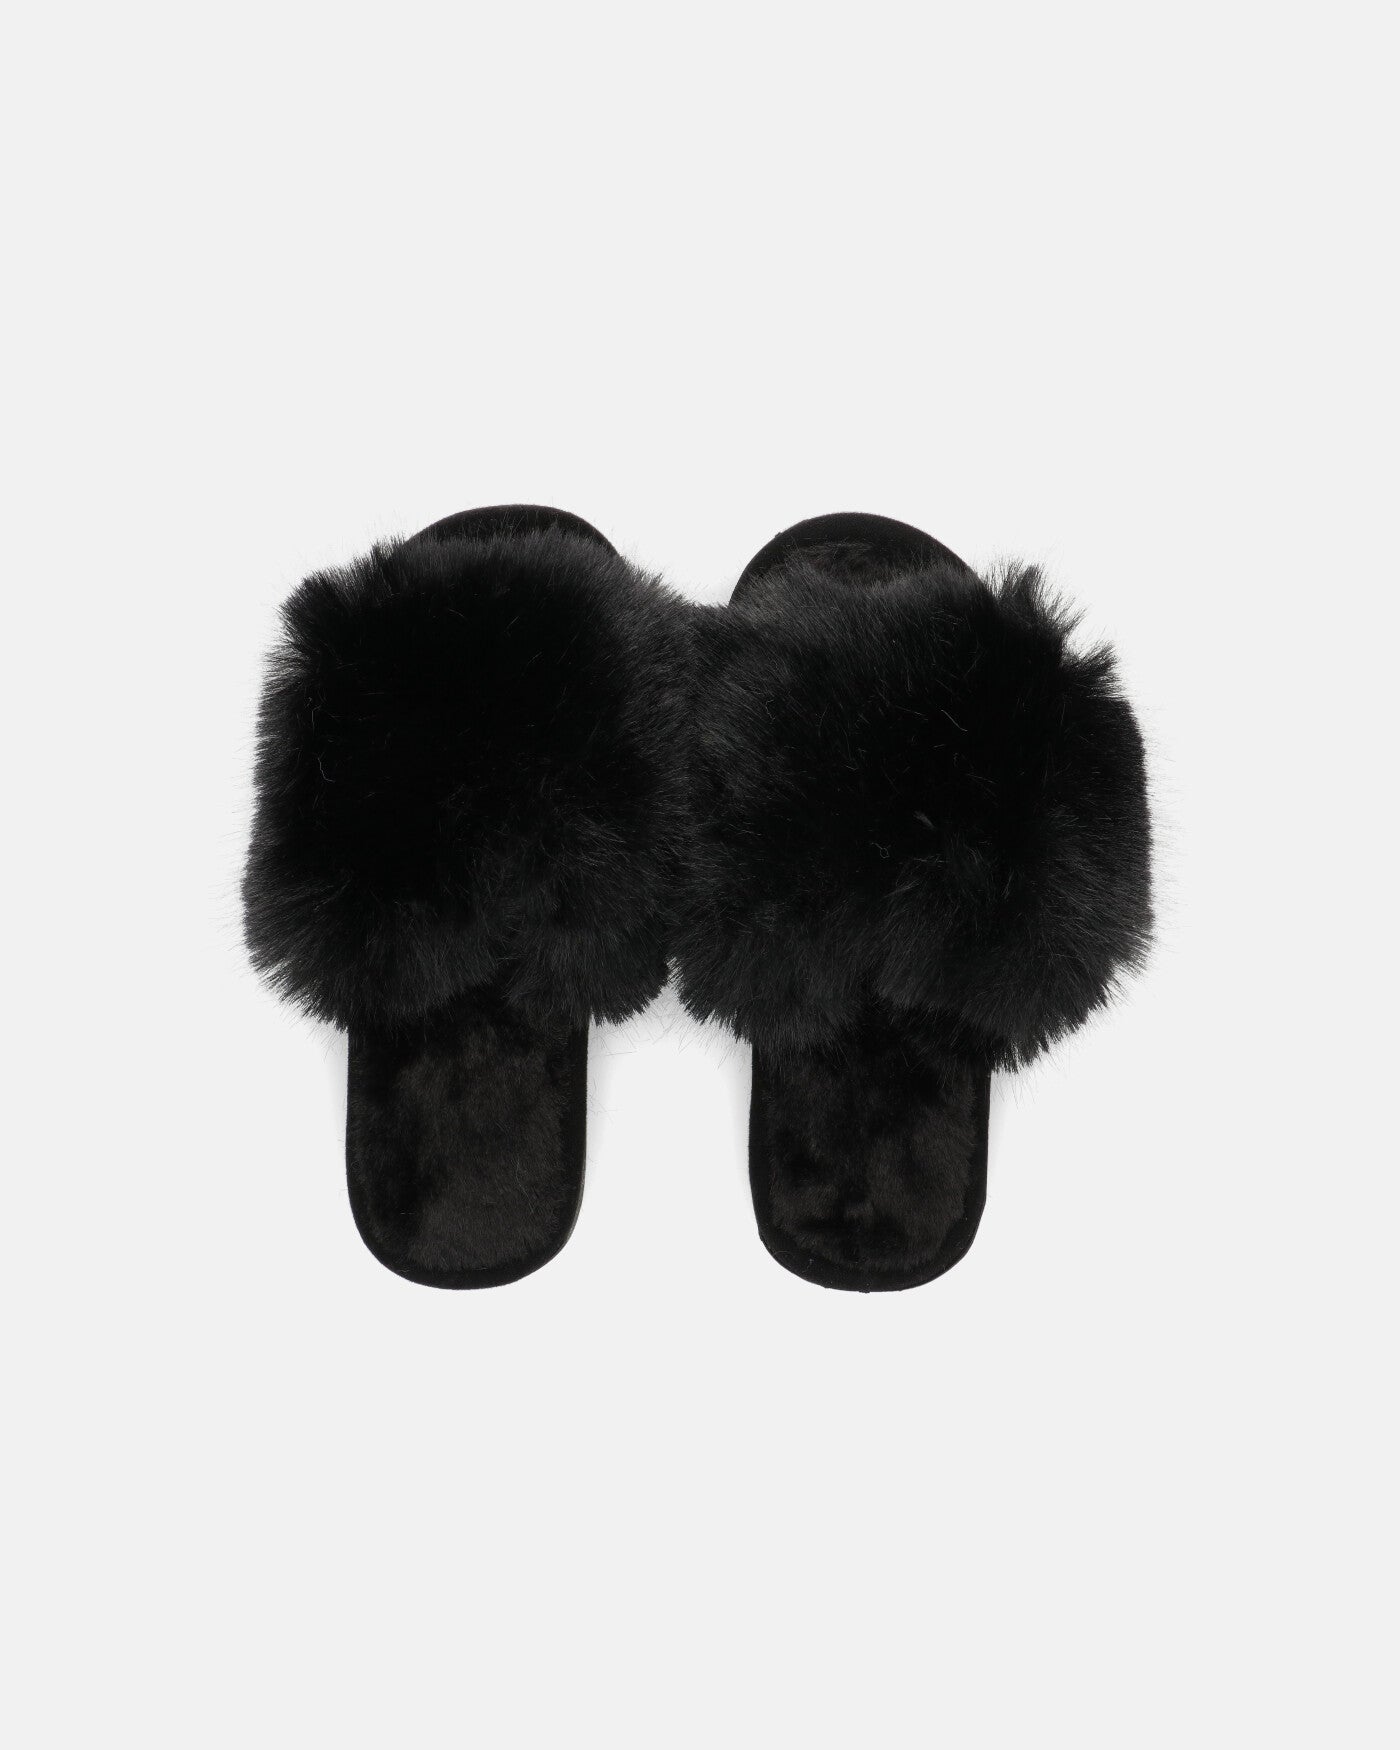 HAMA - black fur open toe slippers